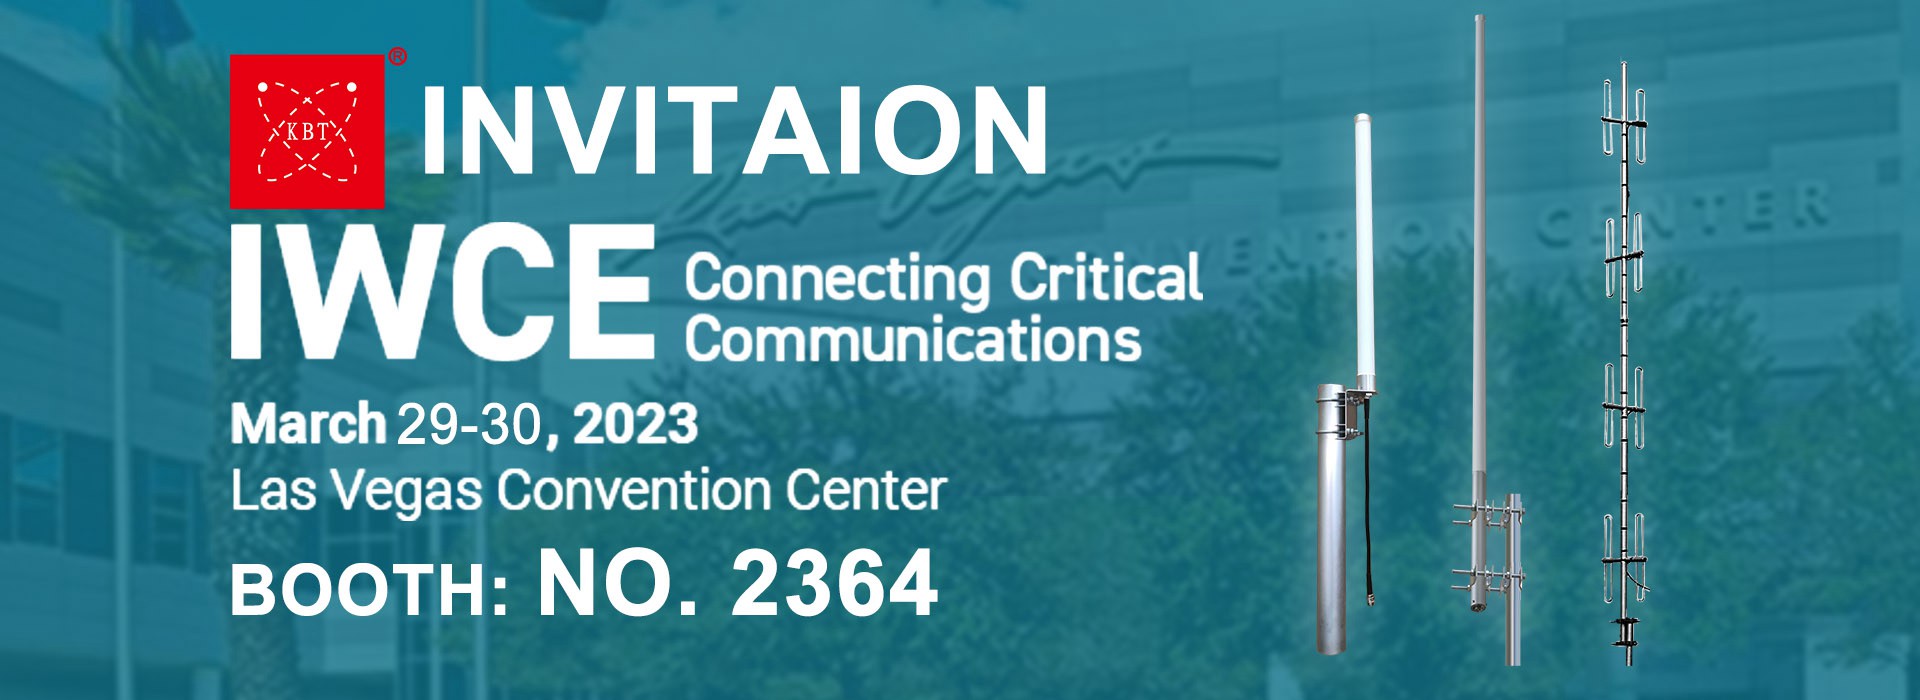 INVITAION-IWCE2023 (International Wireless Communications Expo)